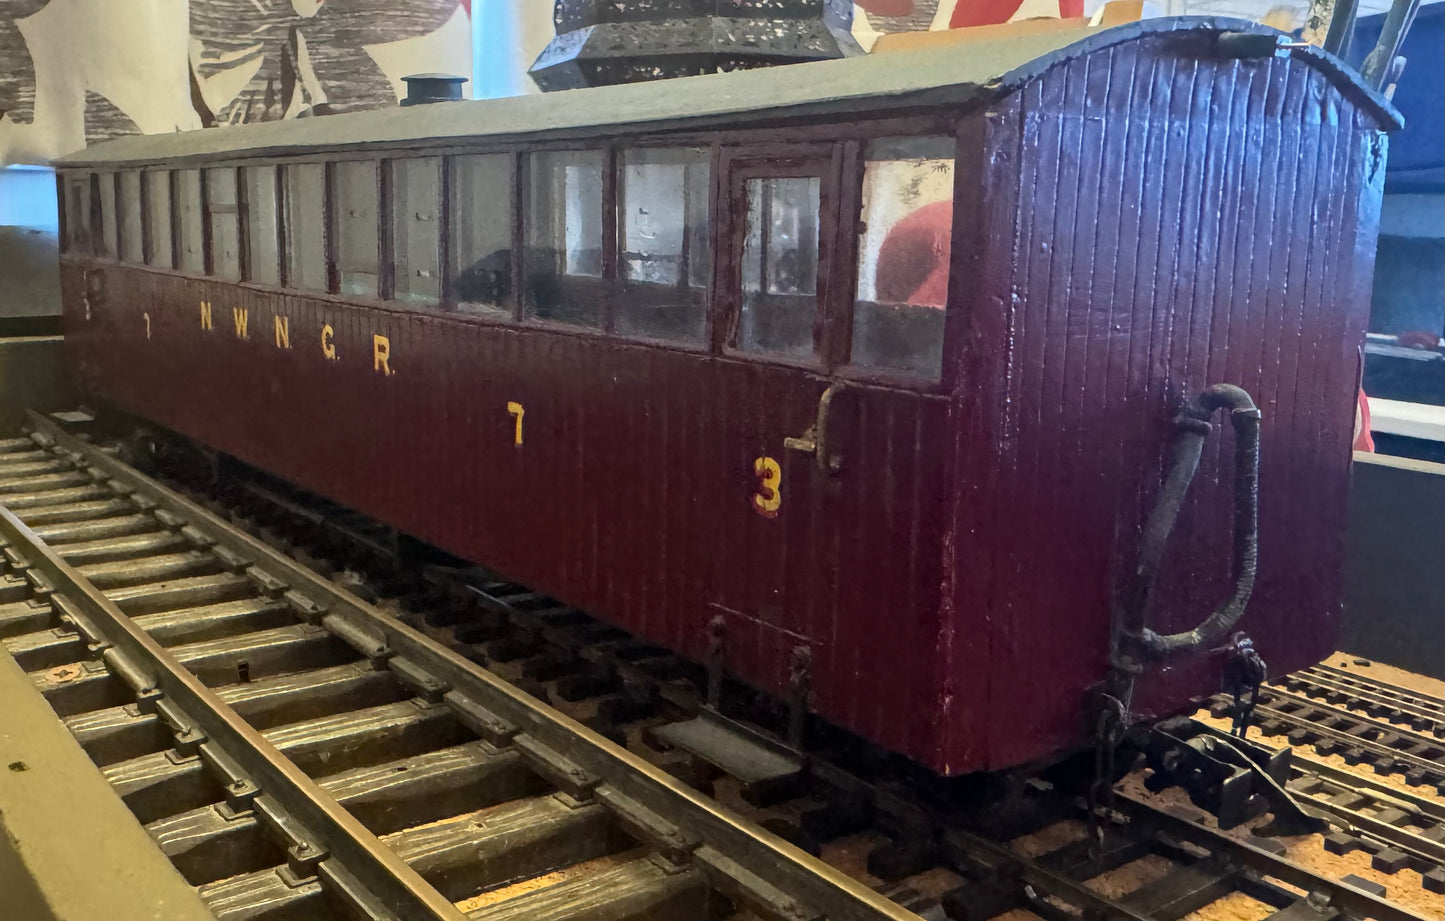 Beeson (16MM Scale / O Gauge) North Wales Narrow Gauge Railway, Coach No.7 in unlined Maroon.